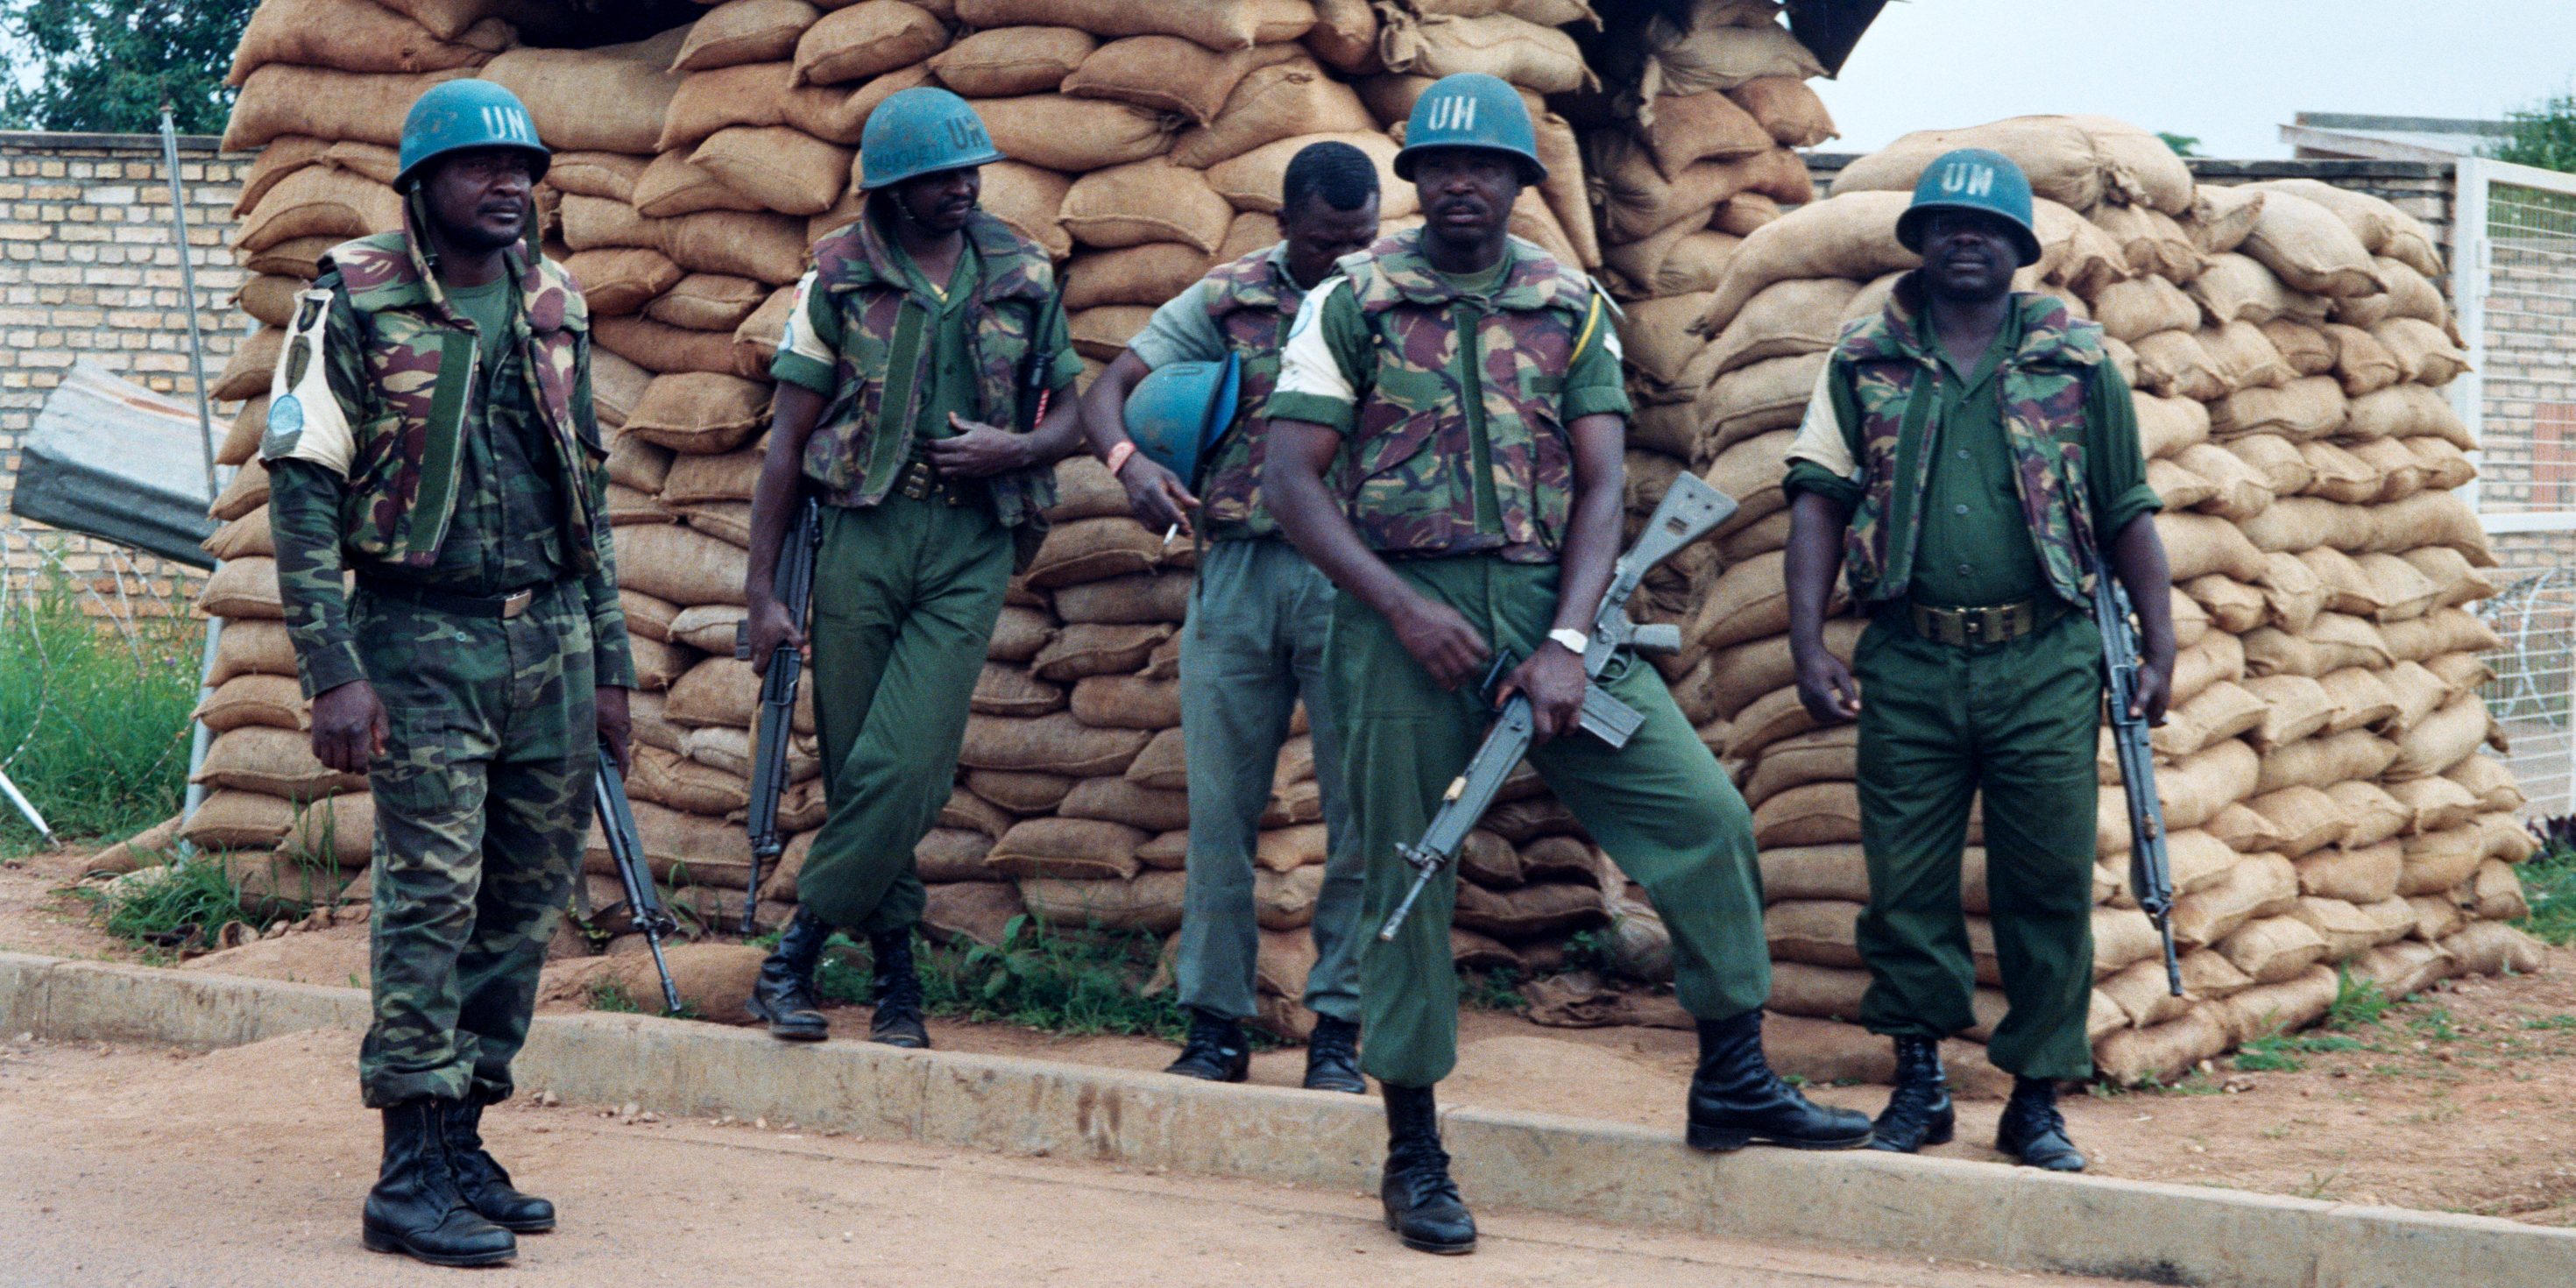 UN peacekeepers, Rwanda genocide